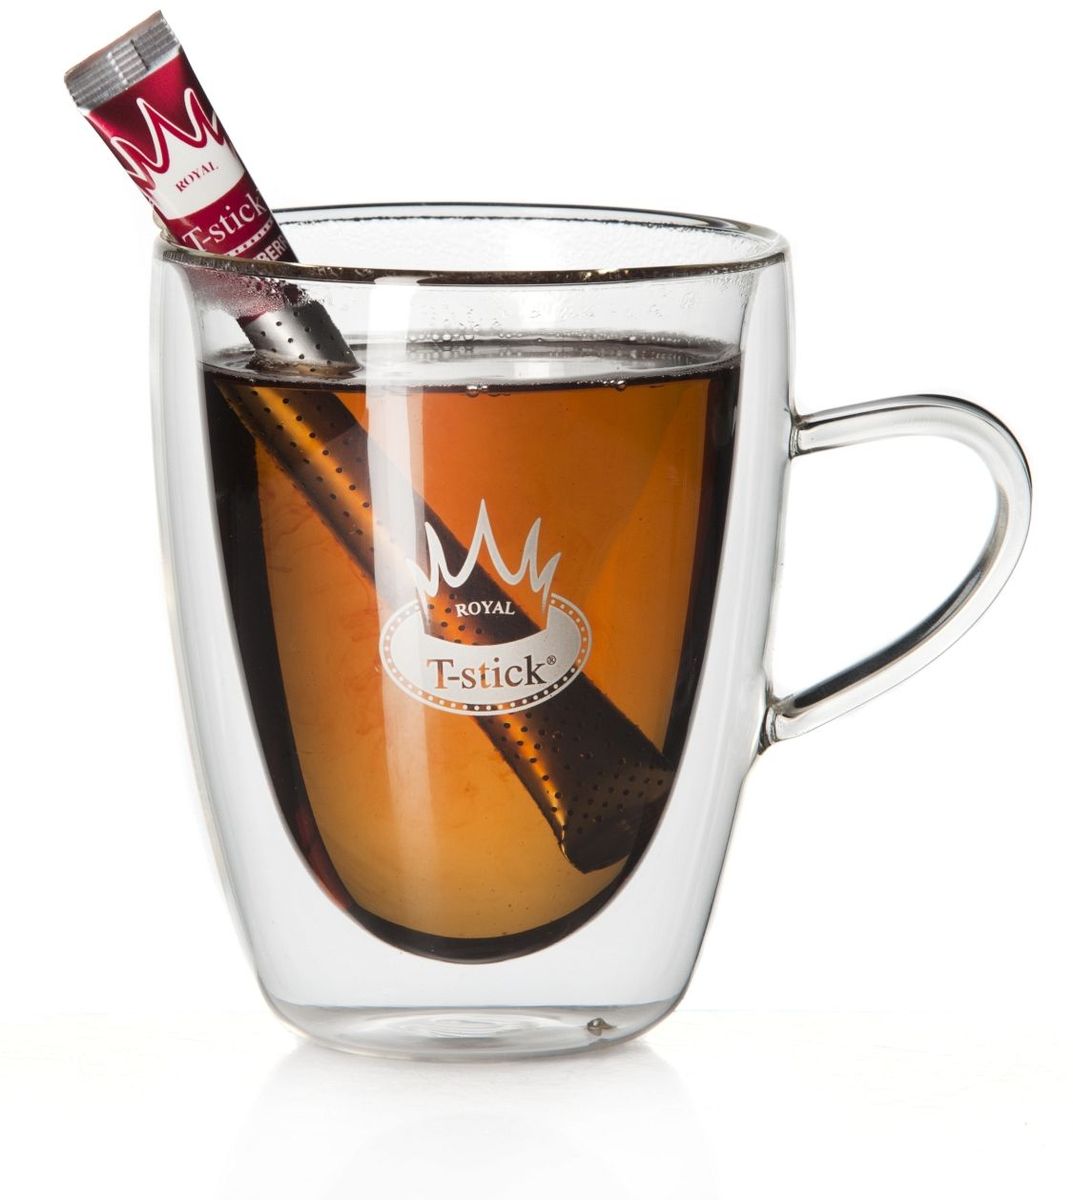   Royal T-Stick: Rooibos Tea    Peach Tea    , 30 